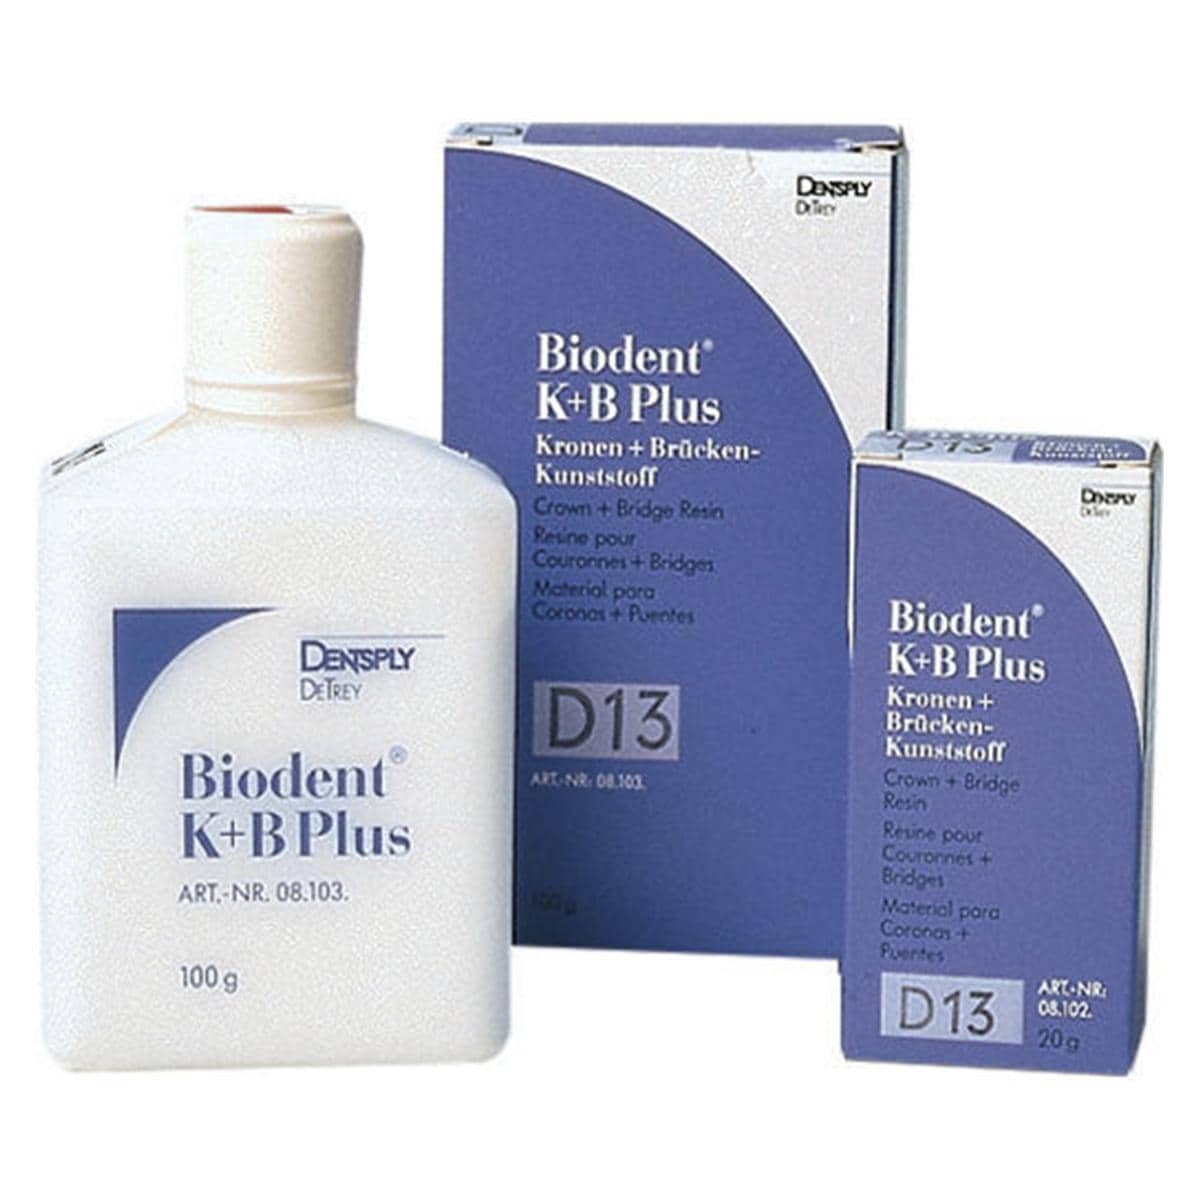 Biodent K+B Plus - Promotor K, Flasche 5 g